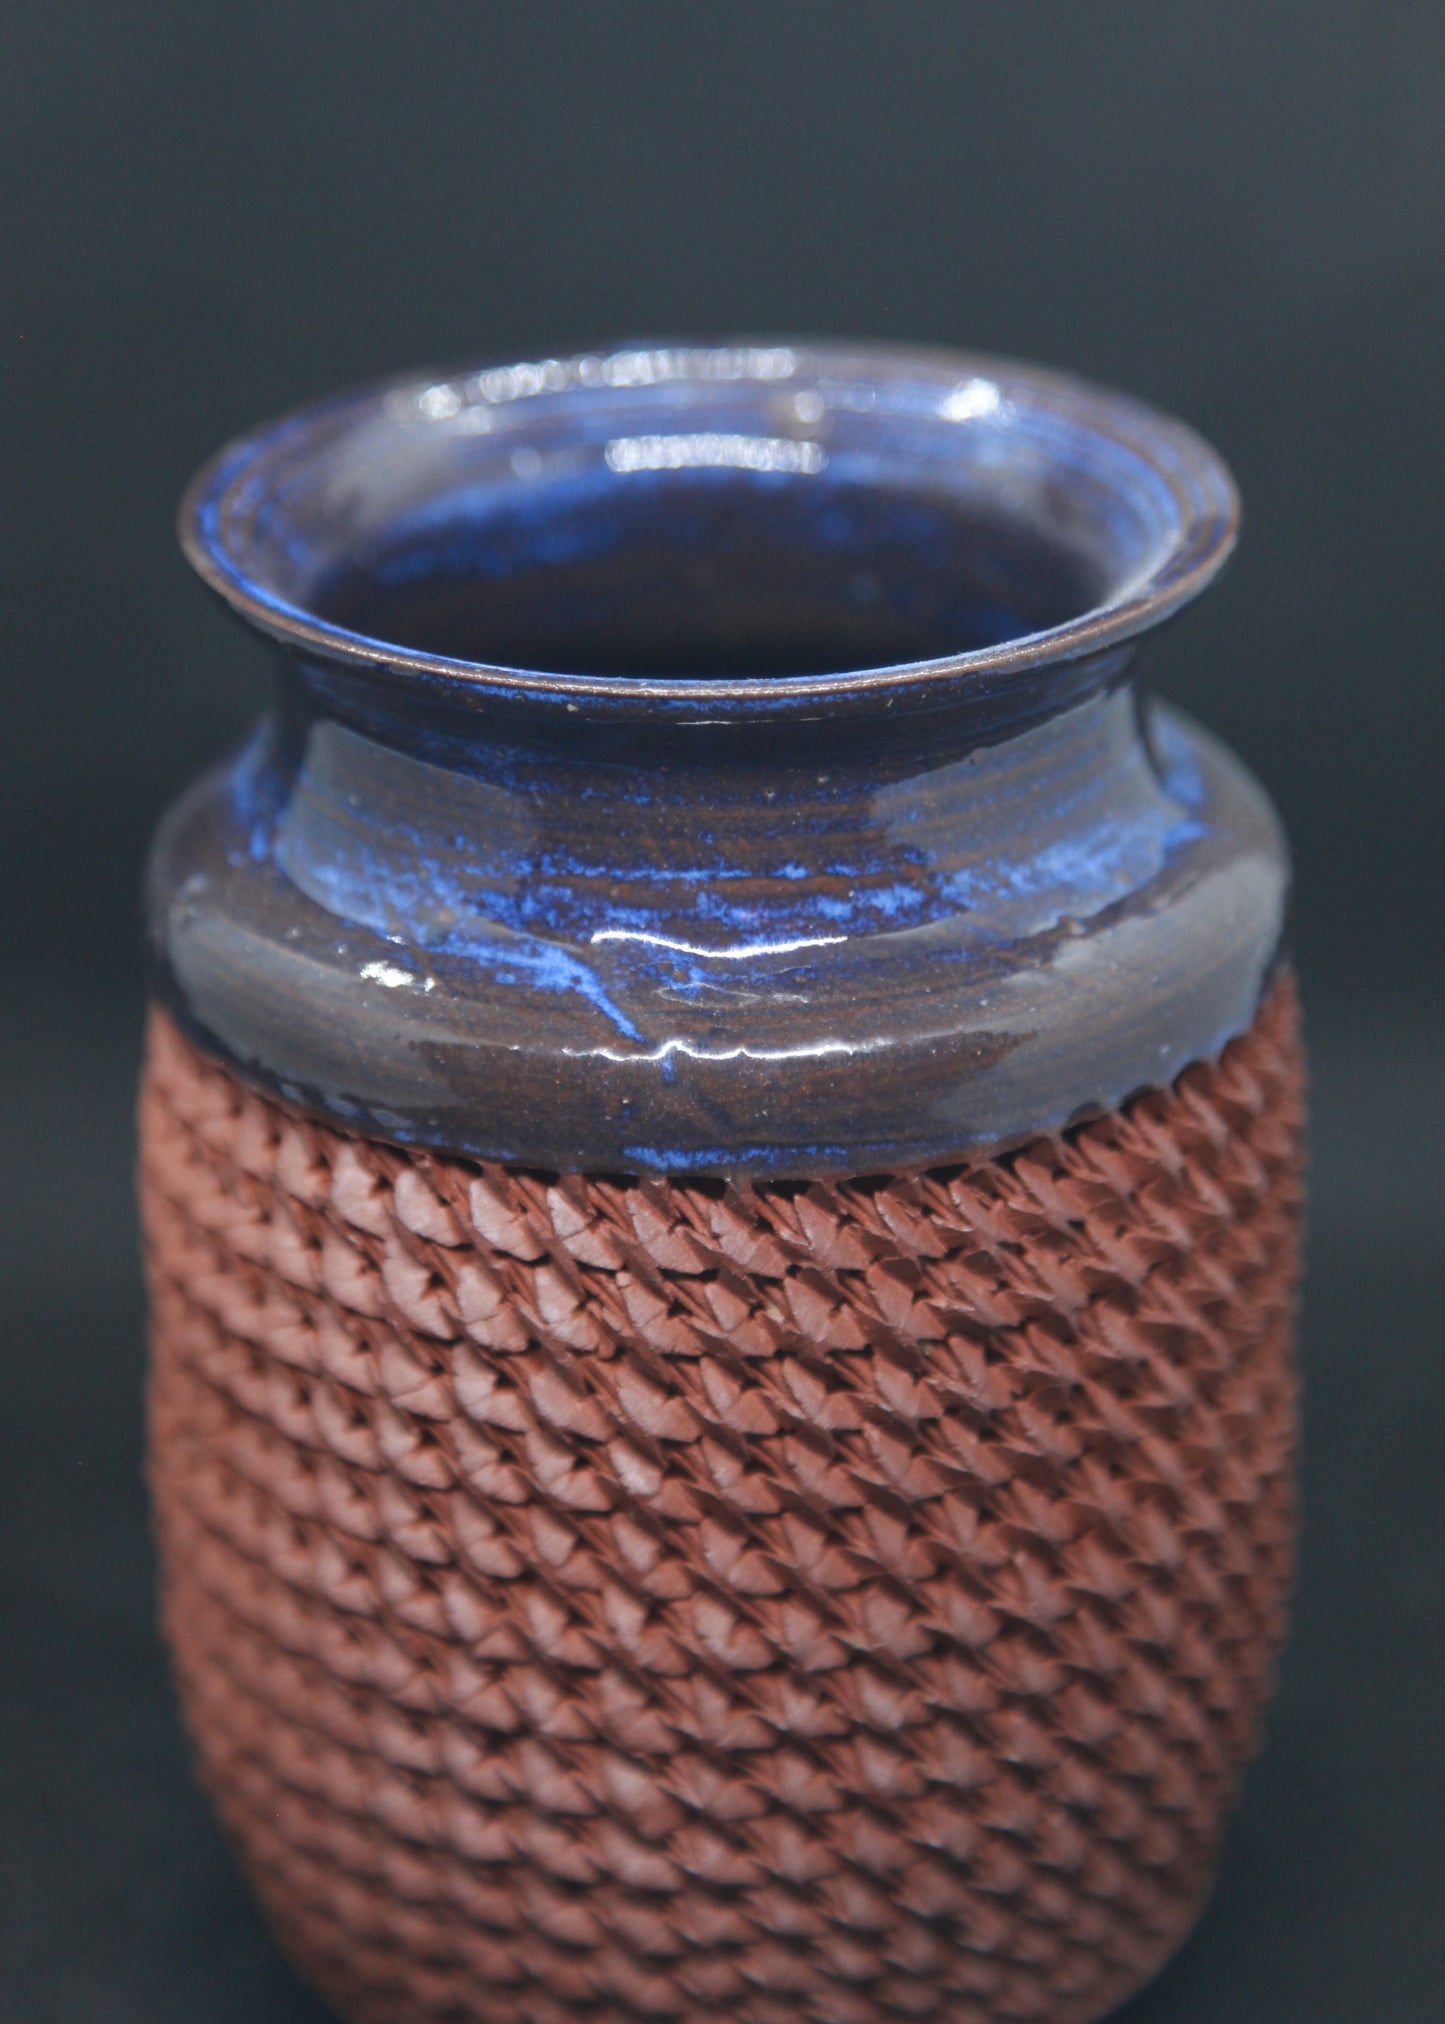 Blue vase on red glaze - braiding pattern